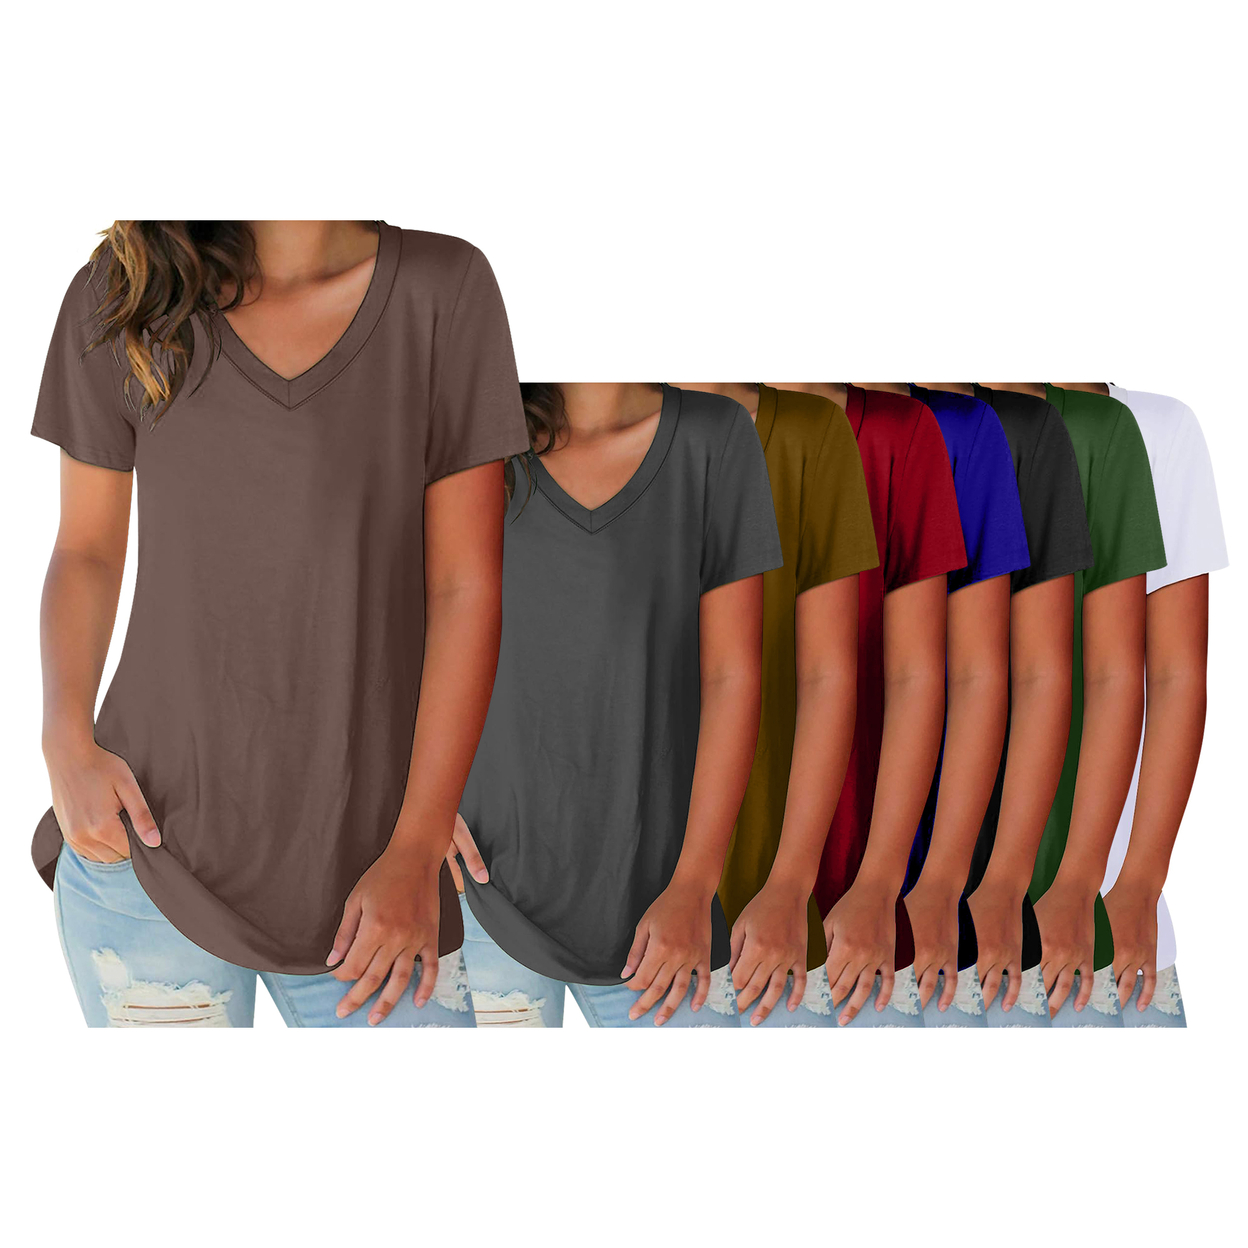 3-Pack: Women's Ultra Soft Smooth Cotton Blend Basic V-Neck Short Sleeve Shirts - Black, Navy, Brown, Medium